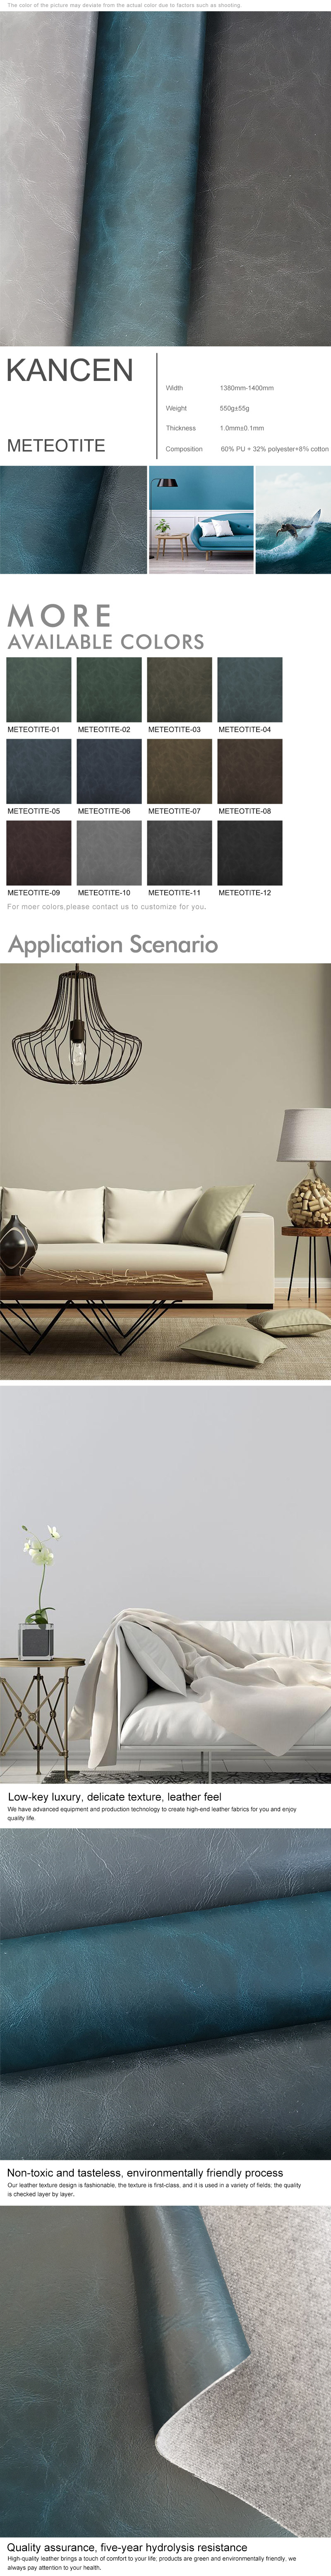 Sofa Artificial Leather design - KANCEN